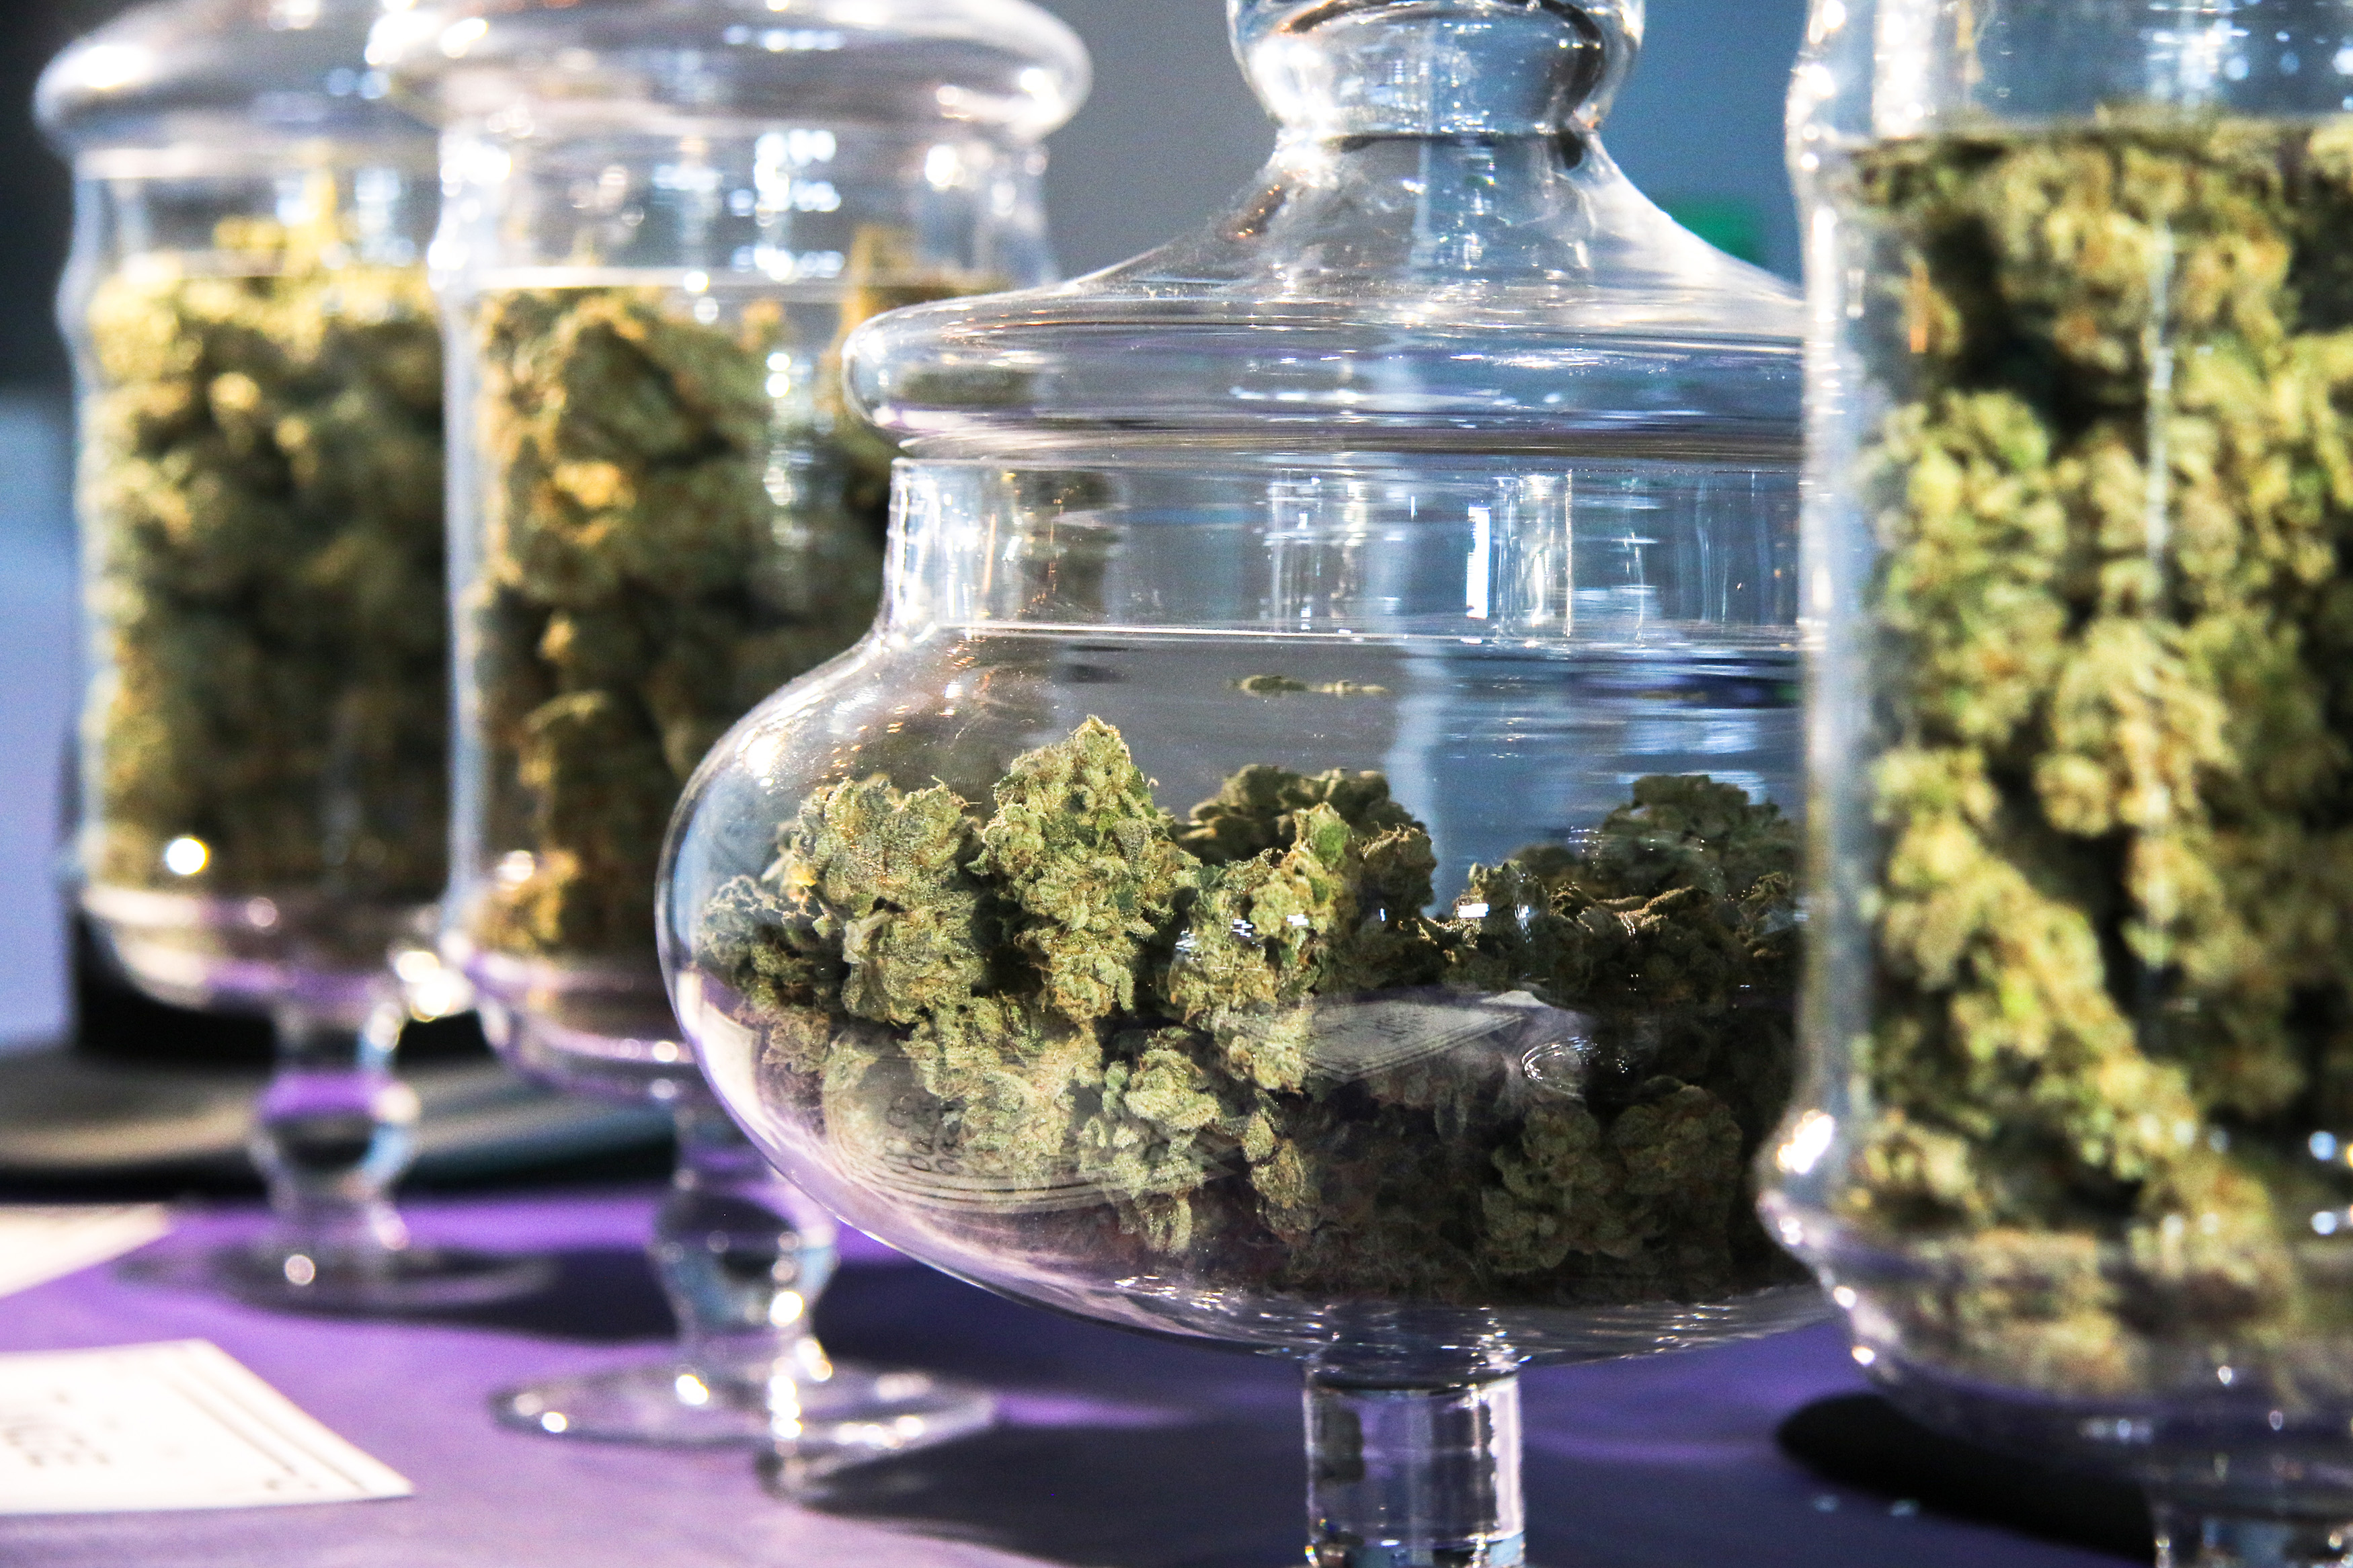 High Noon Cultivation tradeshow booth Cannabis in jars at portland summer fair 2016